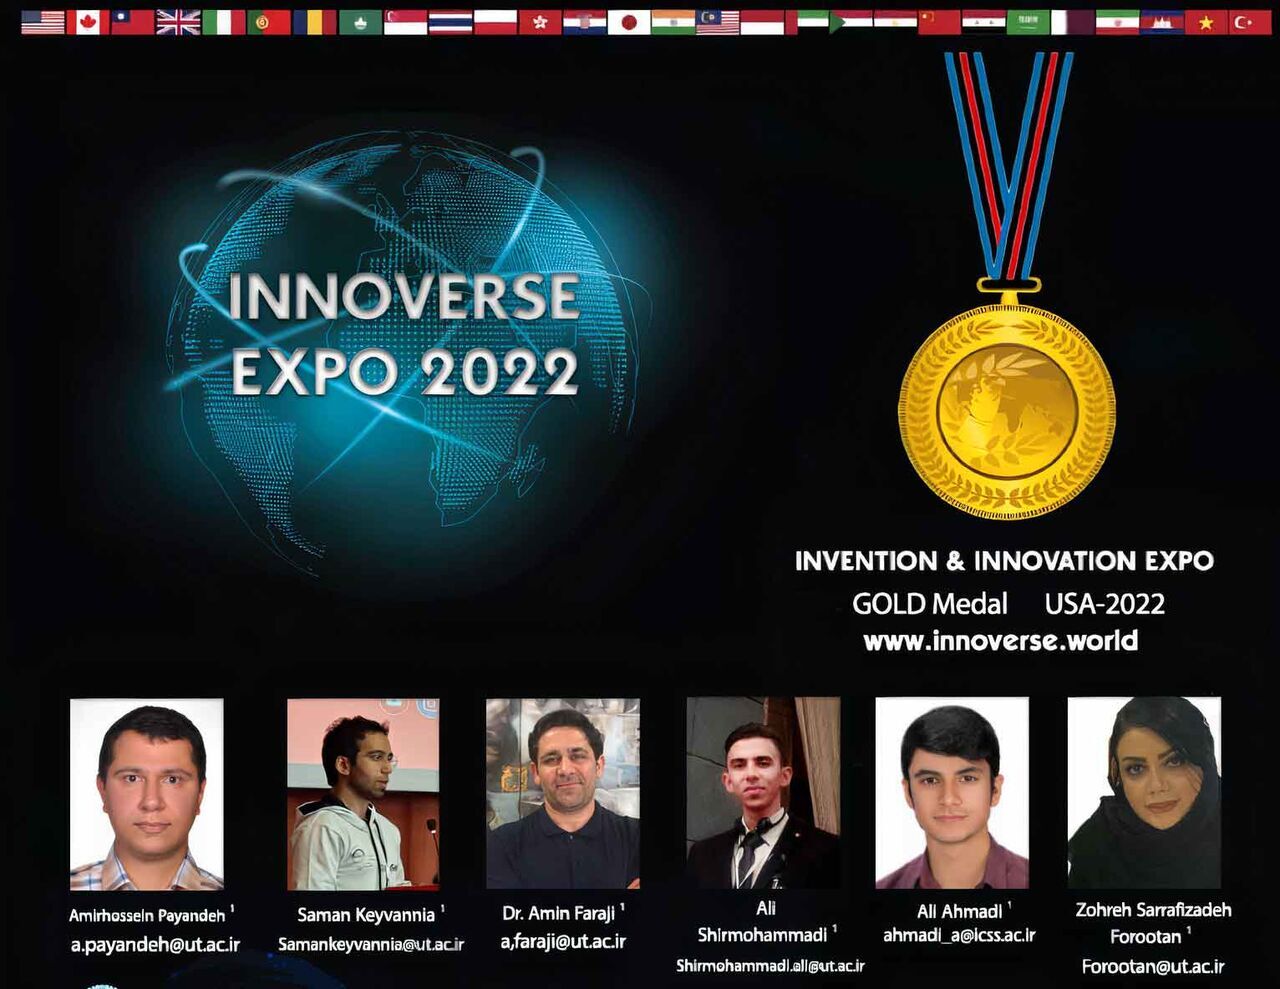 إيران تحرز ذهبية مهرجان اينوفيرس للاختراعات